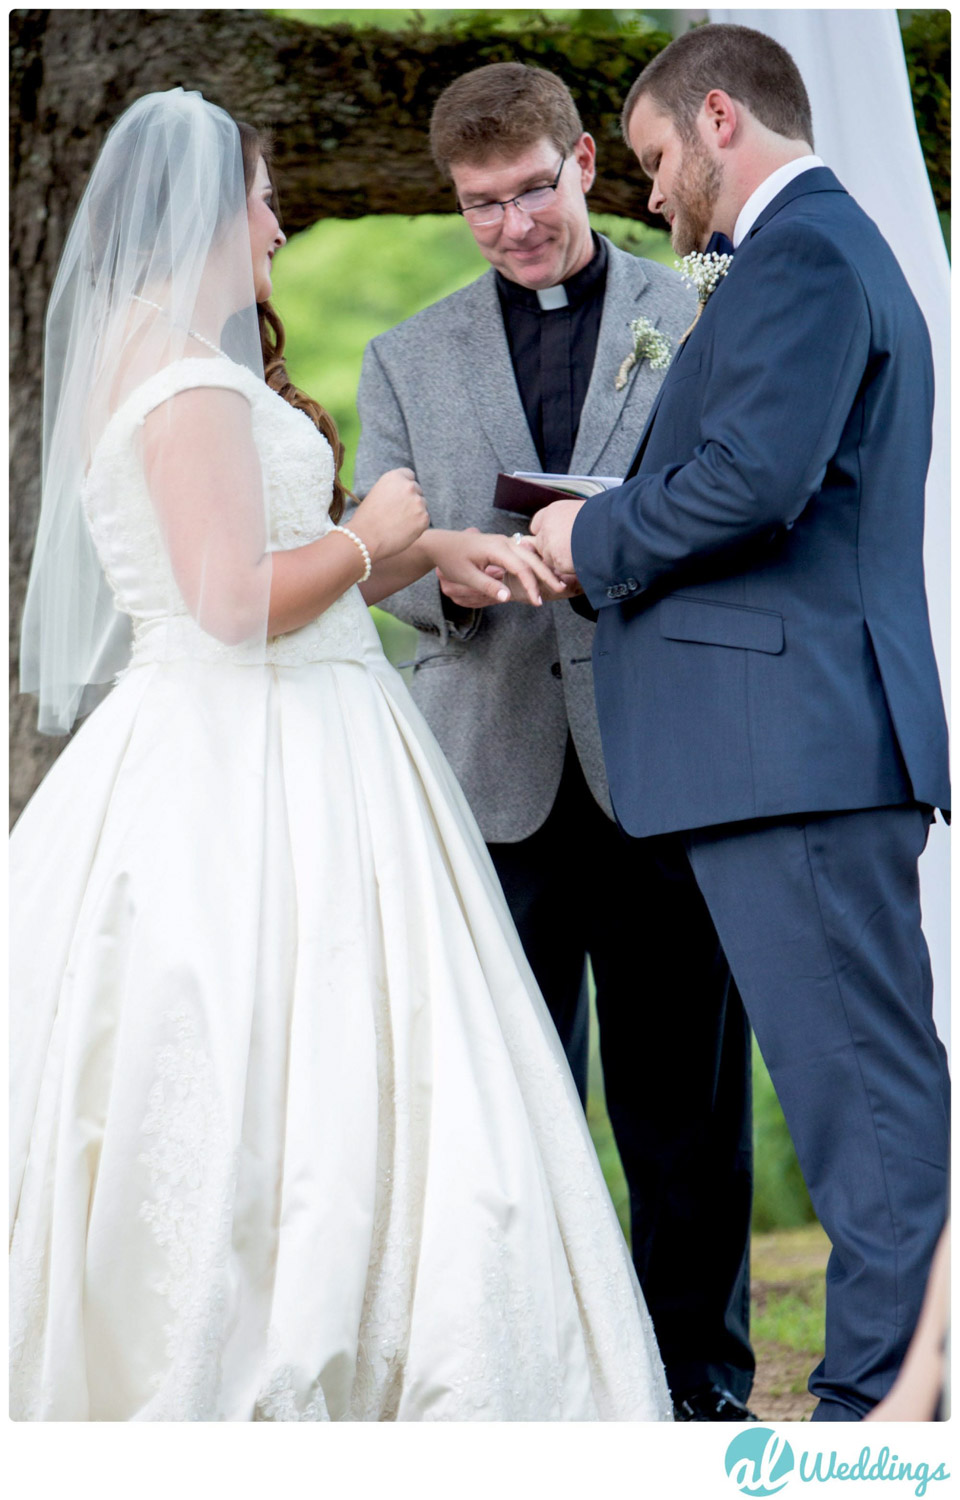 Alabama,Ceremony,First dance,Hargis wedding chappel,wedding,